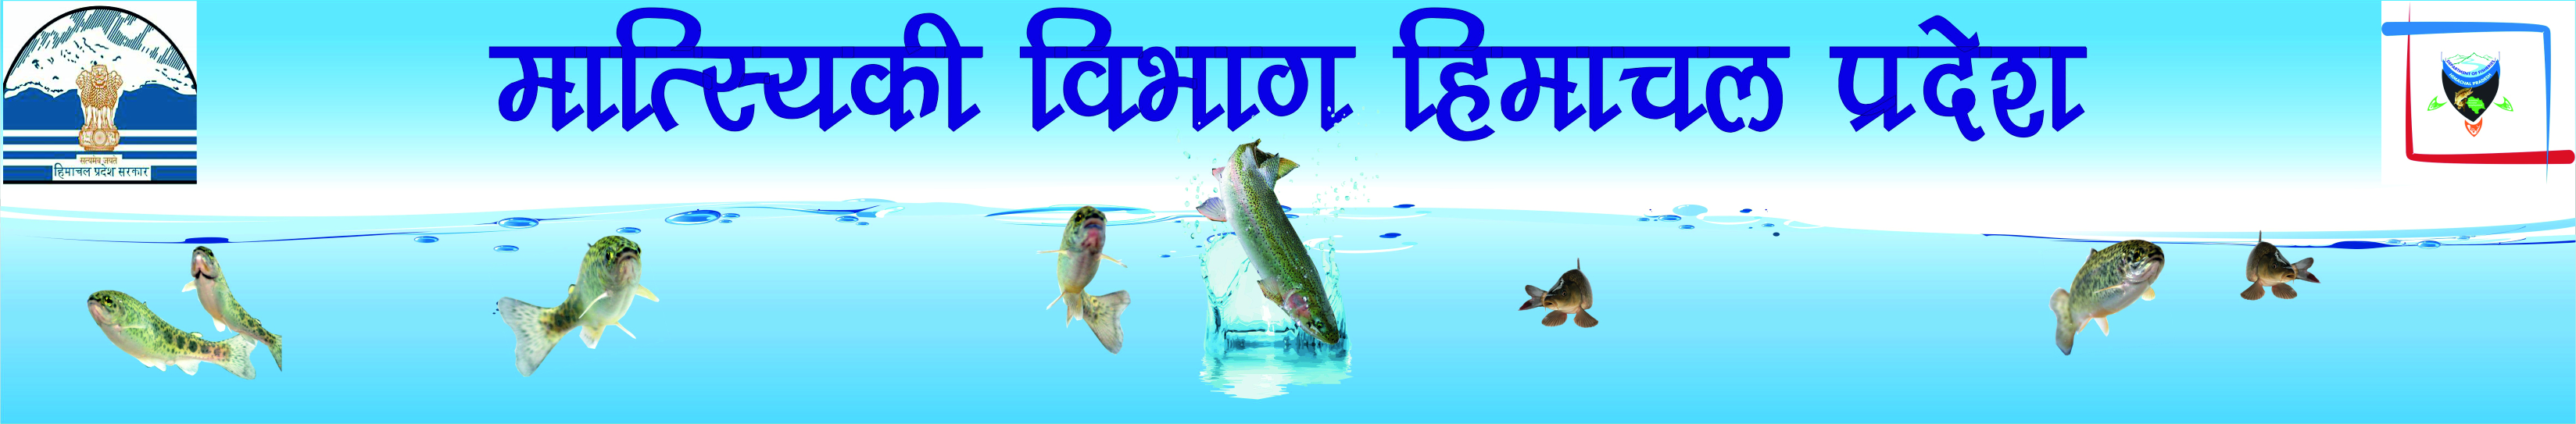 Fisheries Department, Government of Himachal Pradesh